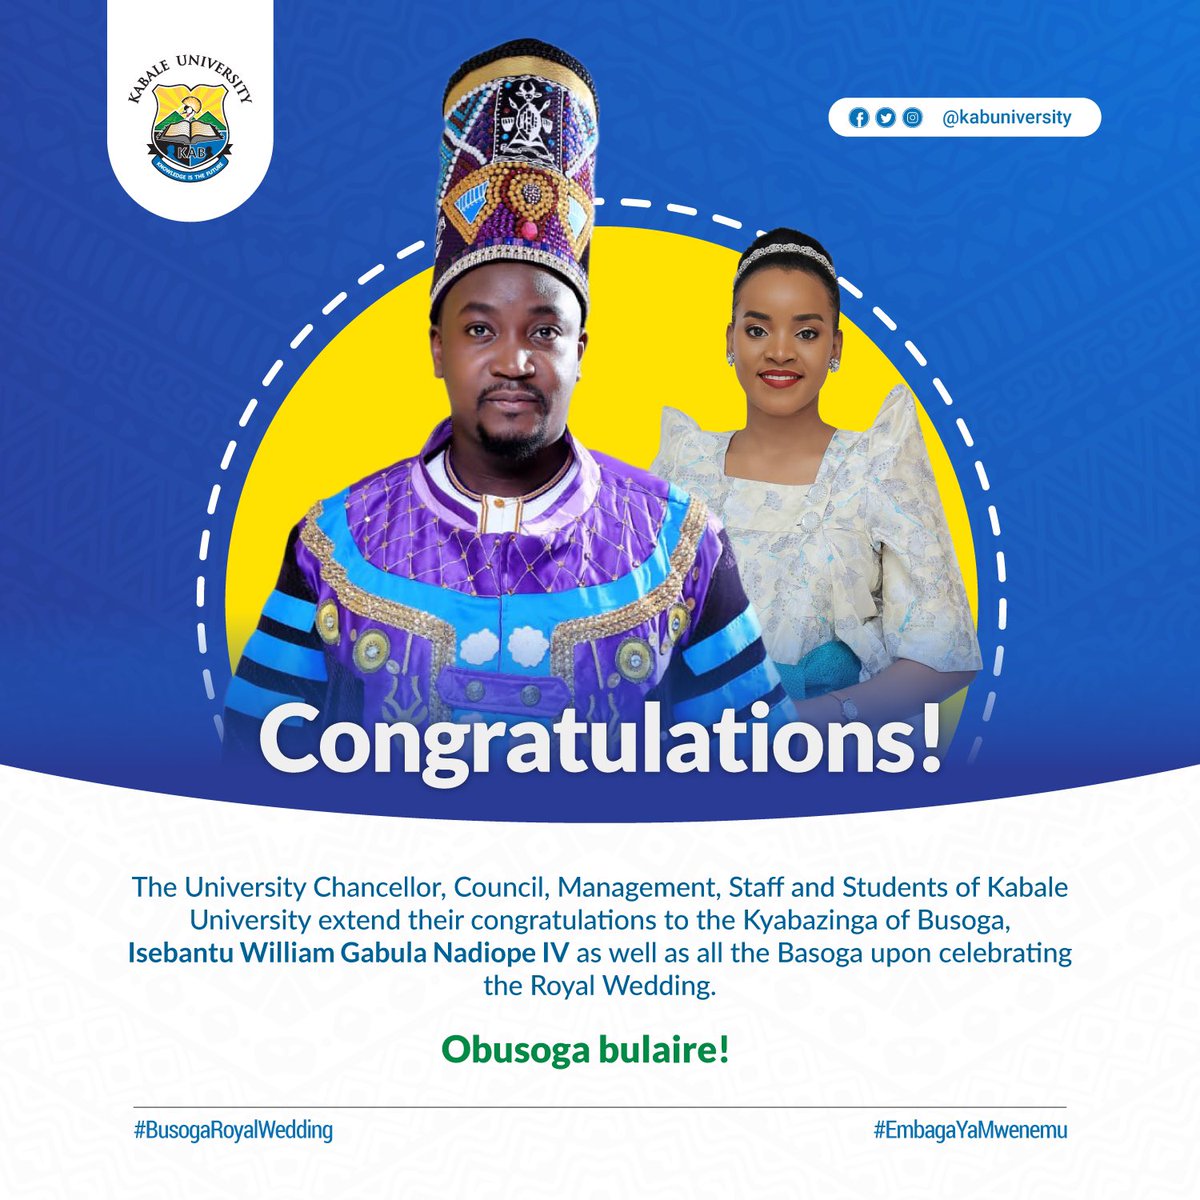 Congratulations to King Nadiope IV, the Kyabazinga of Busoga Kingdom and the Inebantu on your wedding. Wishing you joy and happiness. #BusogaRoyalWedding